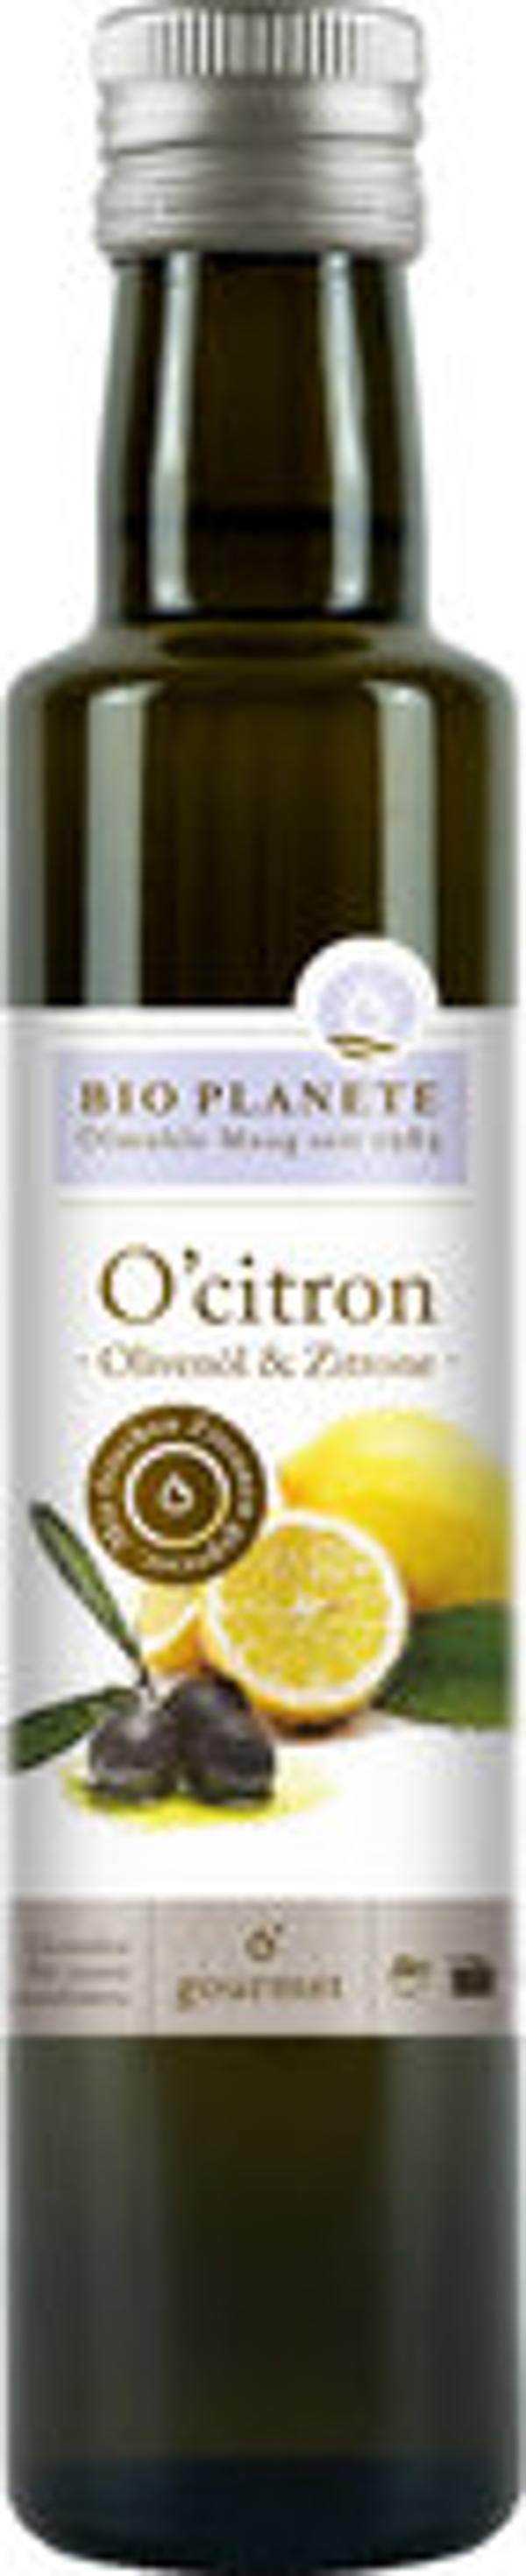 Produktfoto zu Olivenöl O'citron 250ml